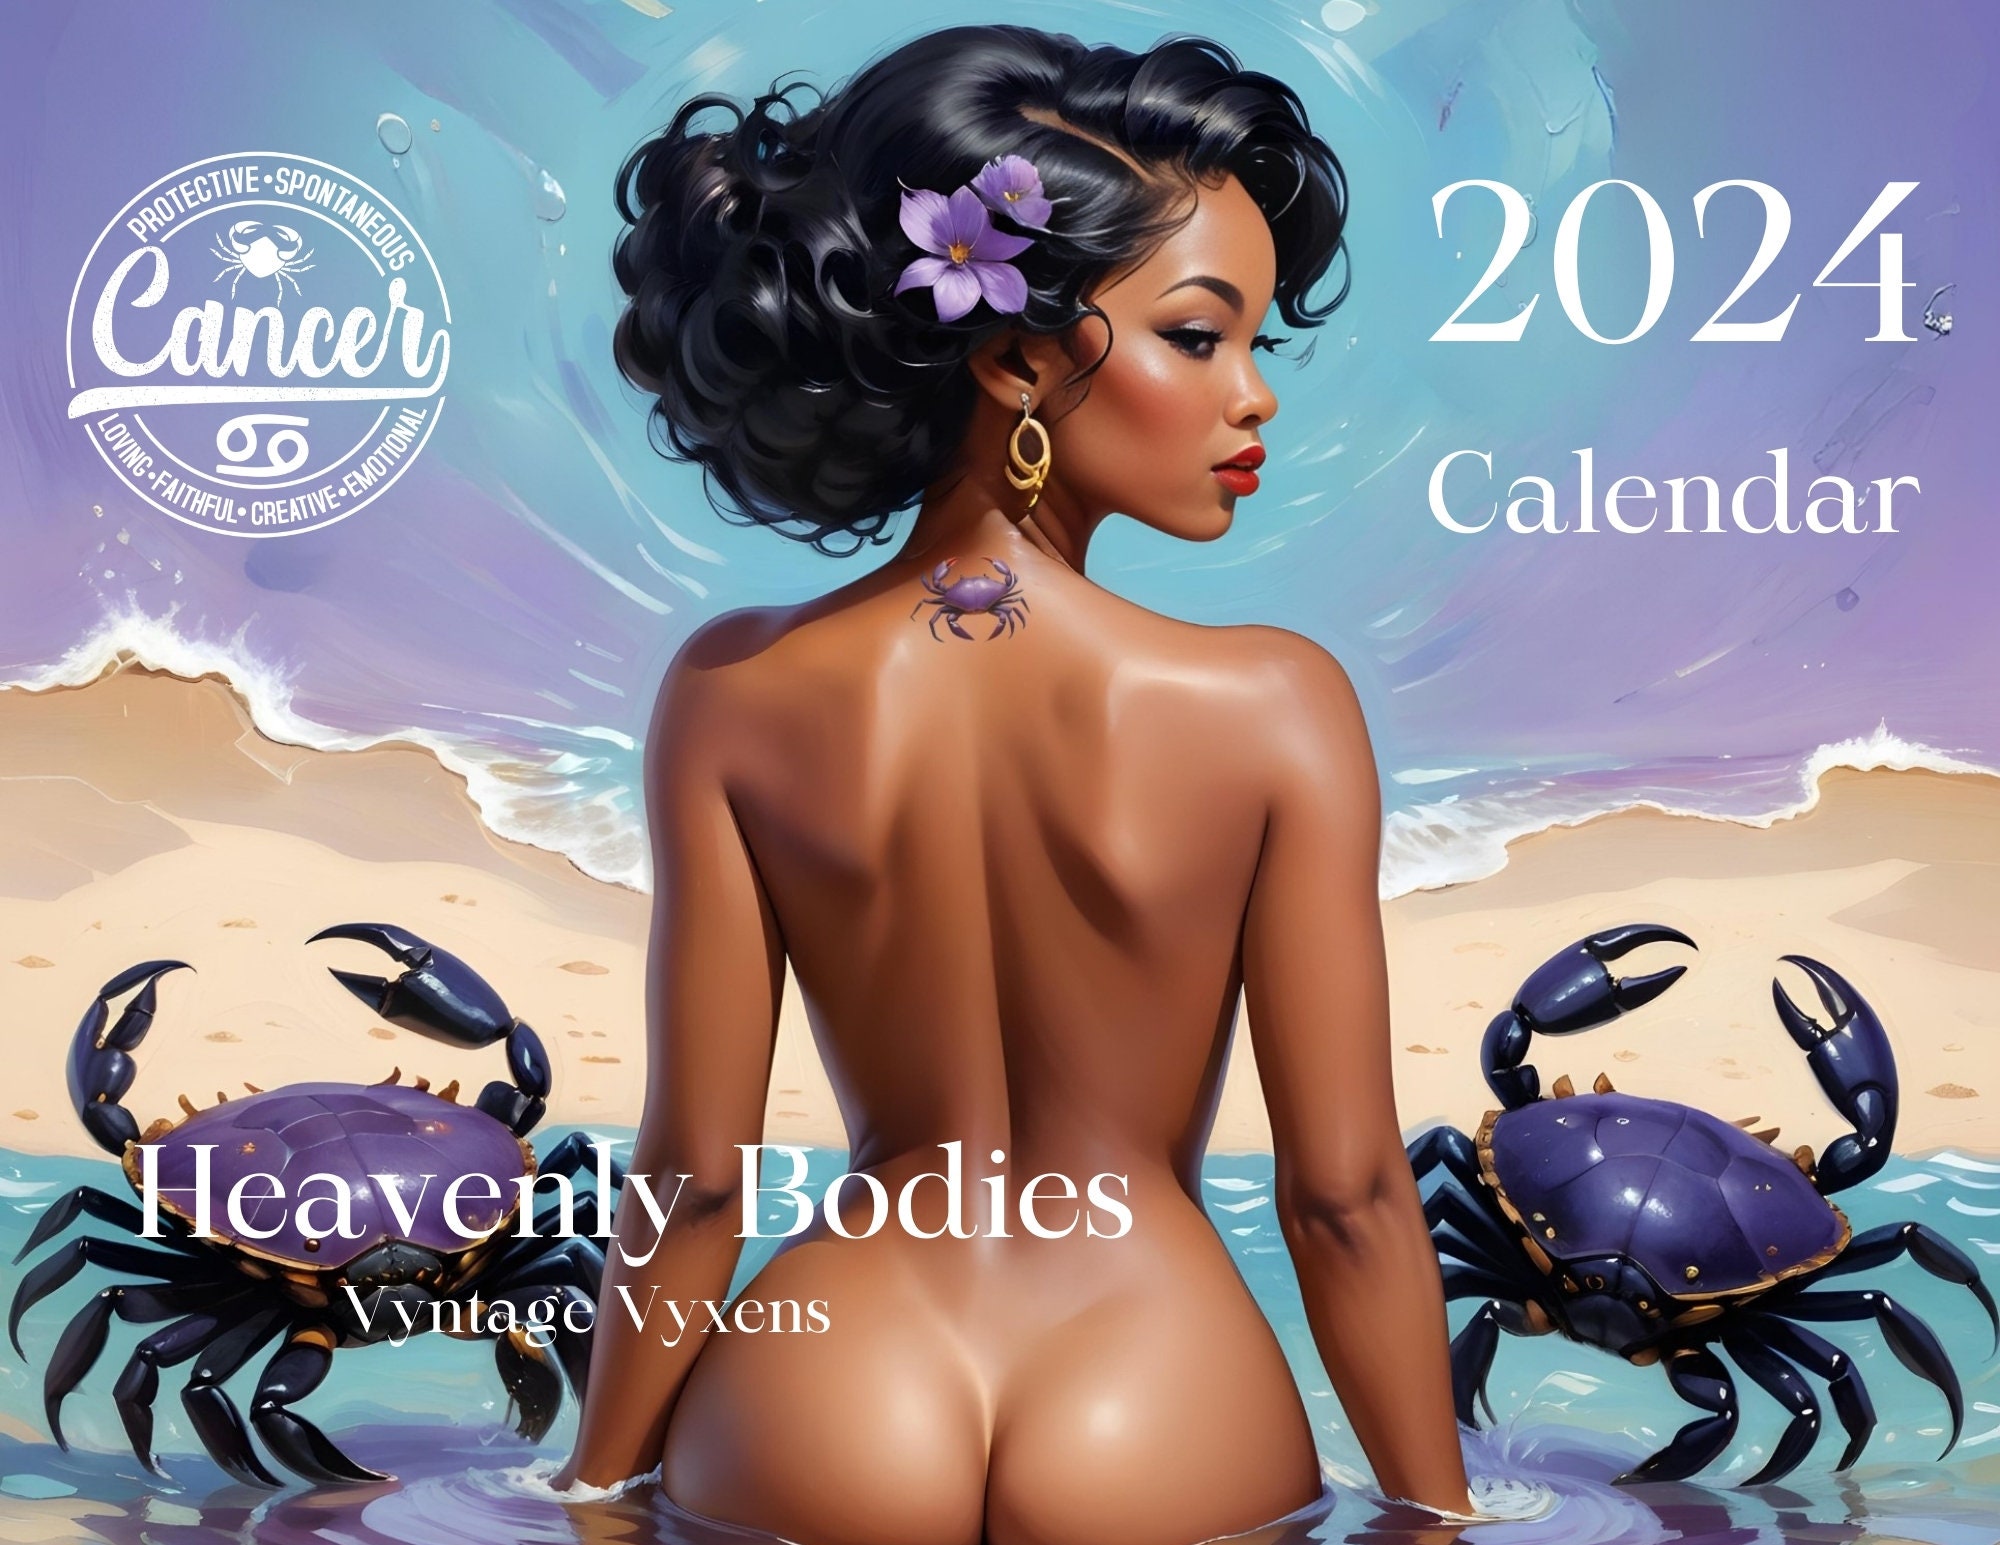 Playboy Girls Calendar 2024, Celebrity Calendar, Playboy Girls 2024 Wall  Calendar, Wall Calendar 2024, Best Gift for Fan, New Year Gift 